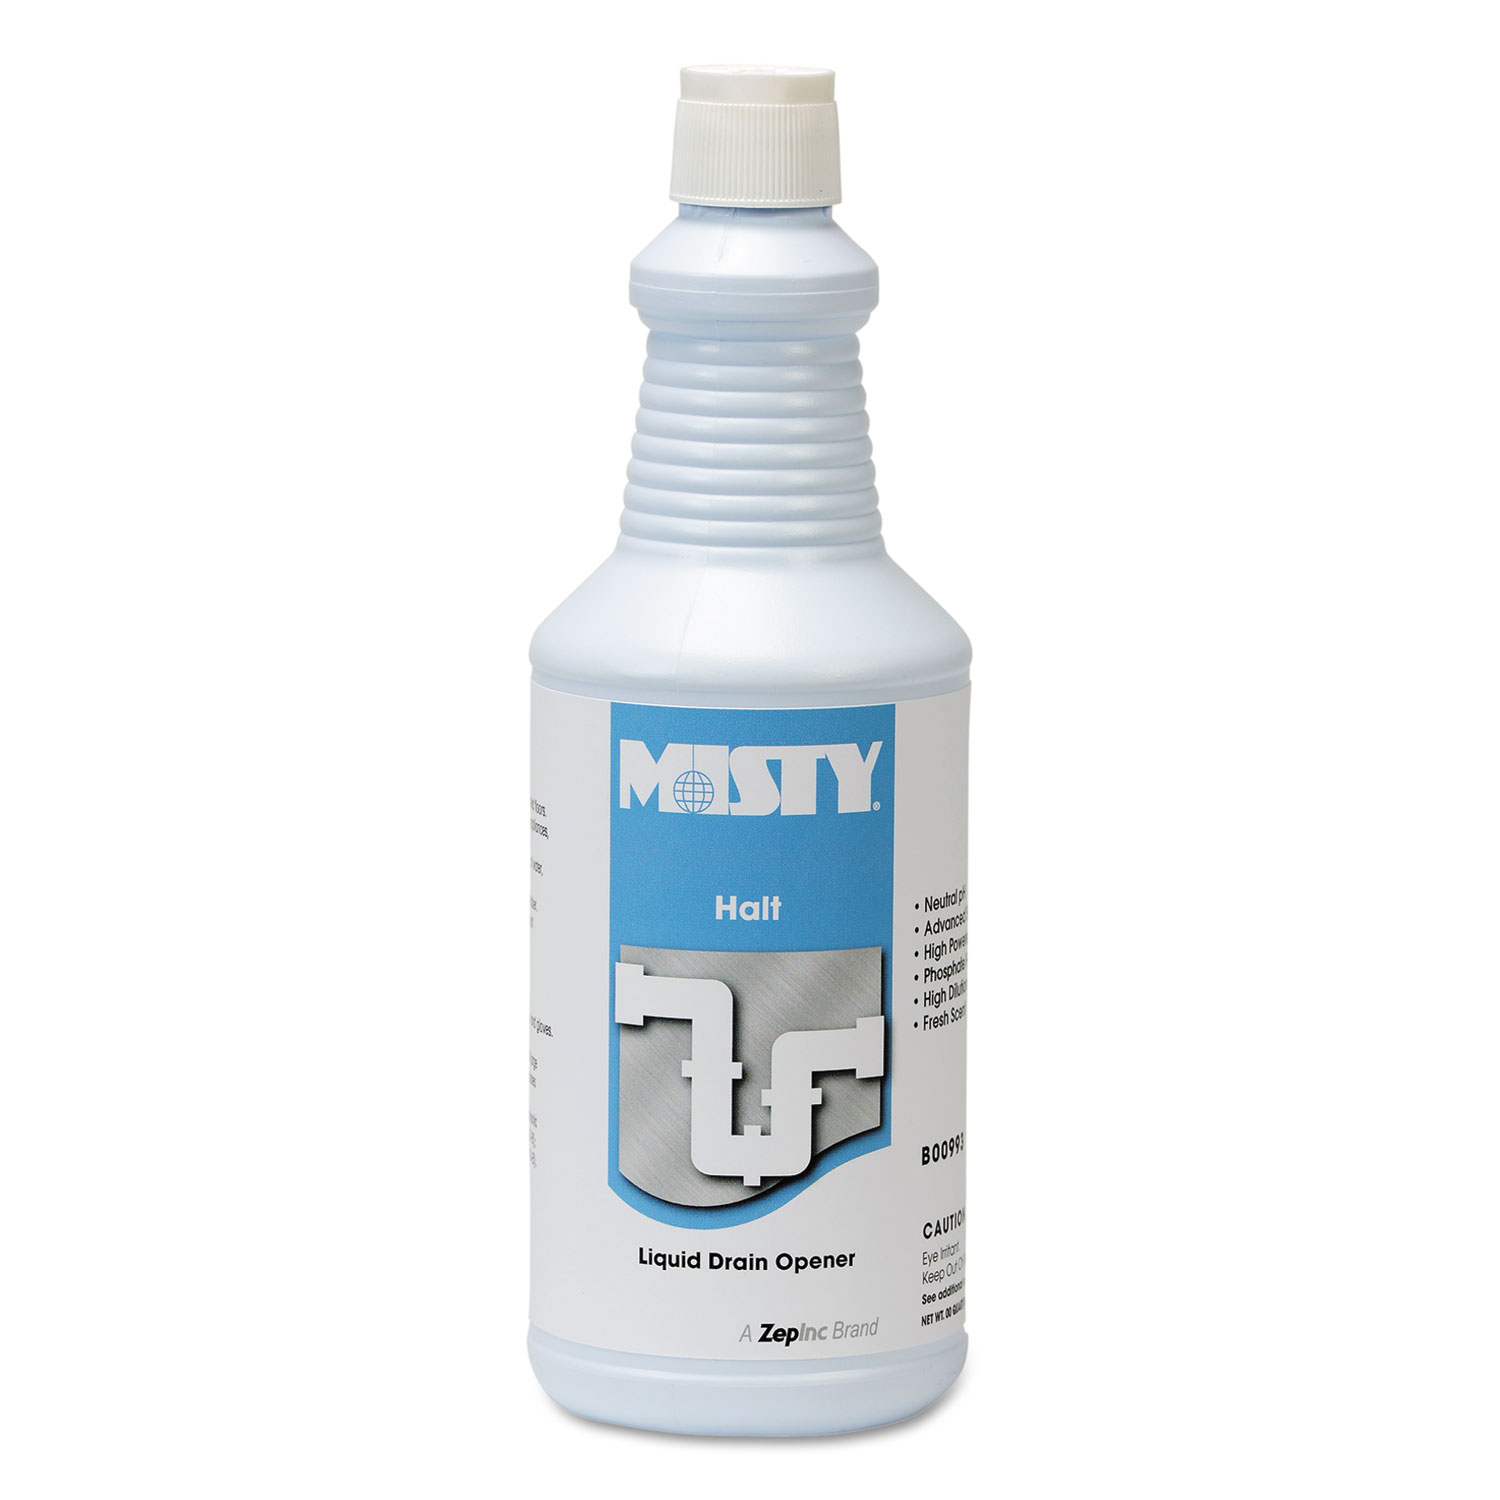  Misty 1003698 Halt Liquid Drain Opener, 32oz Bottle, 12/Carton (AMR1003698) 